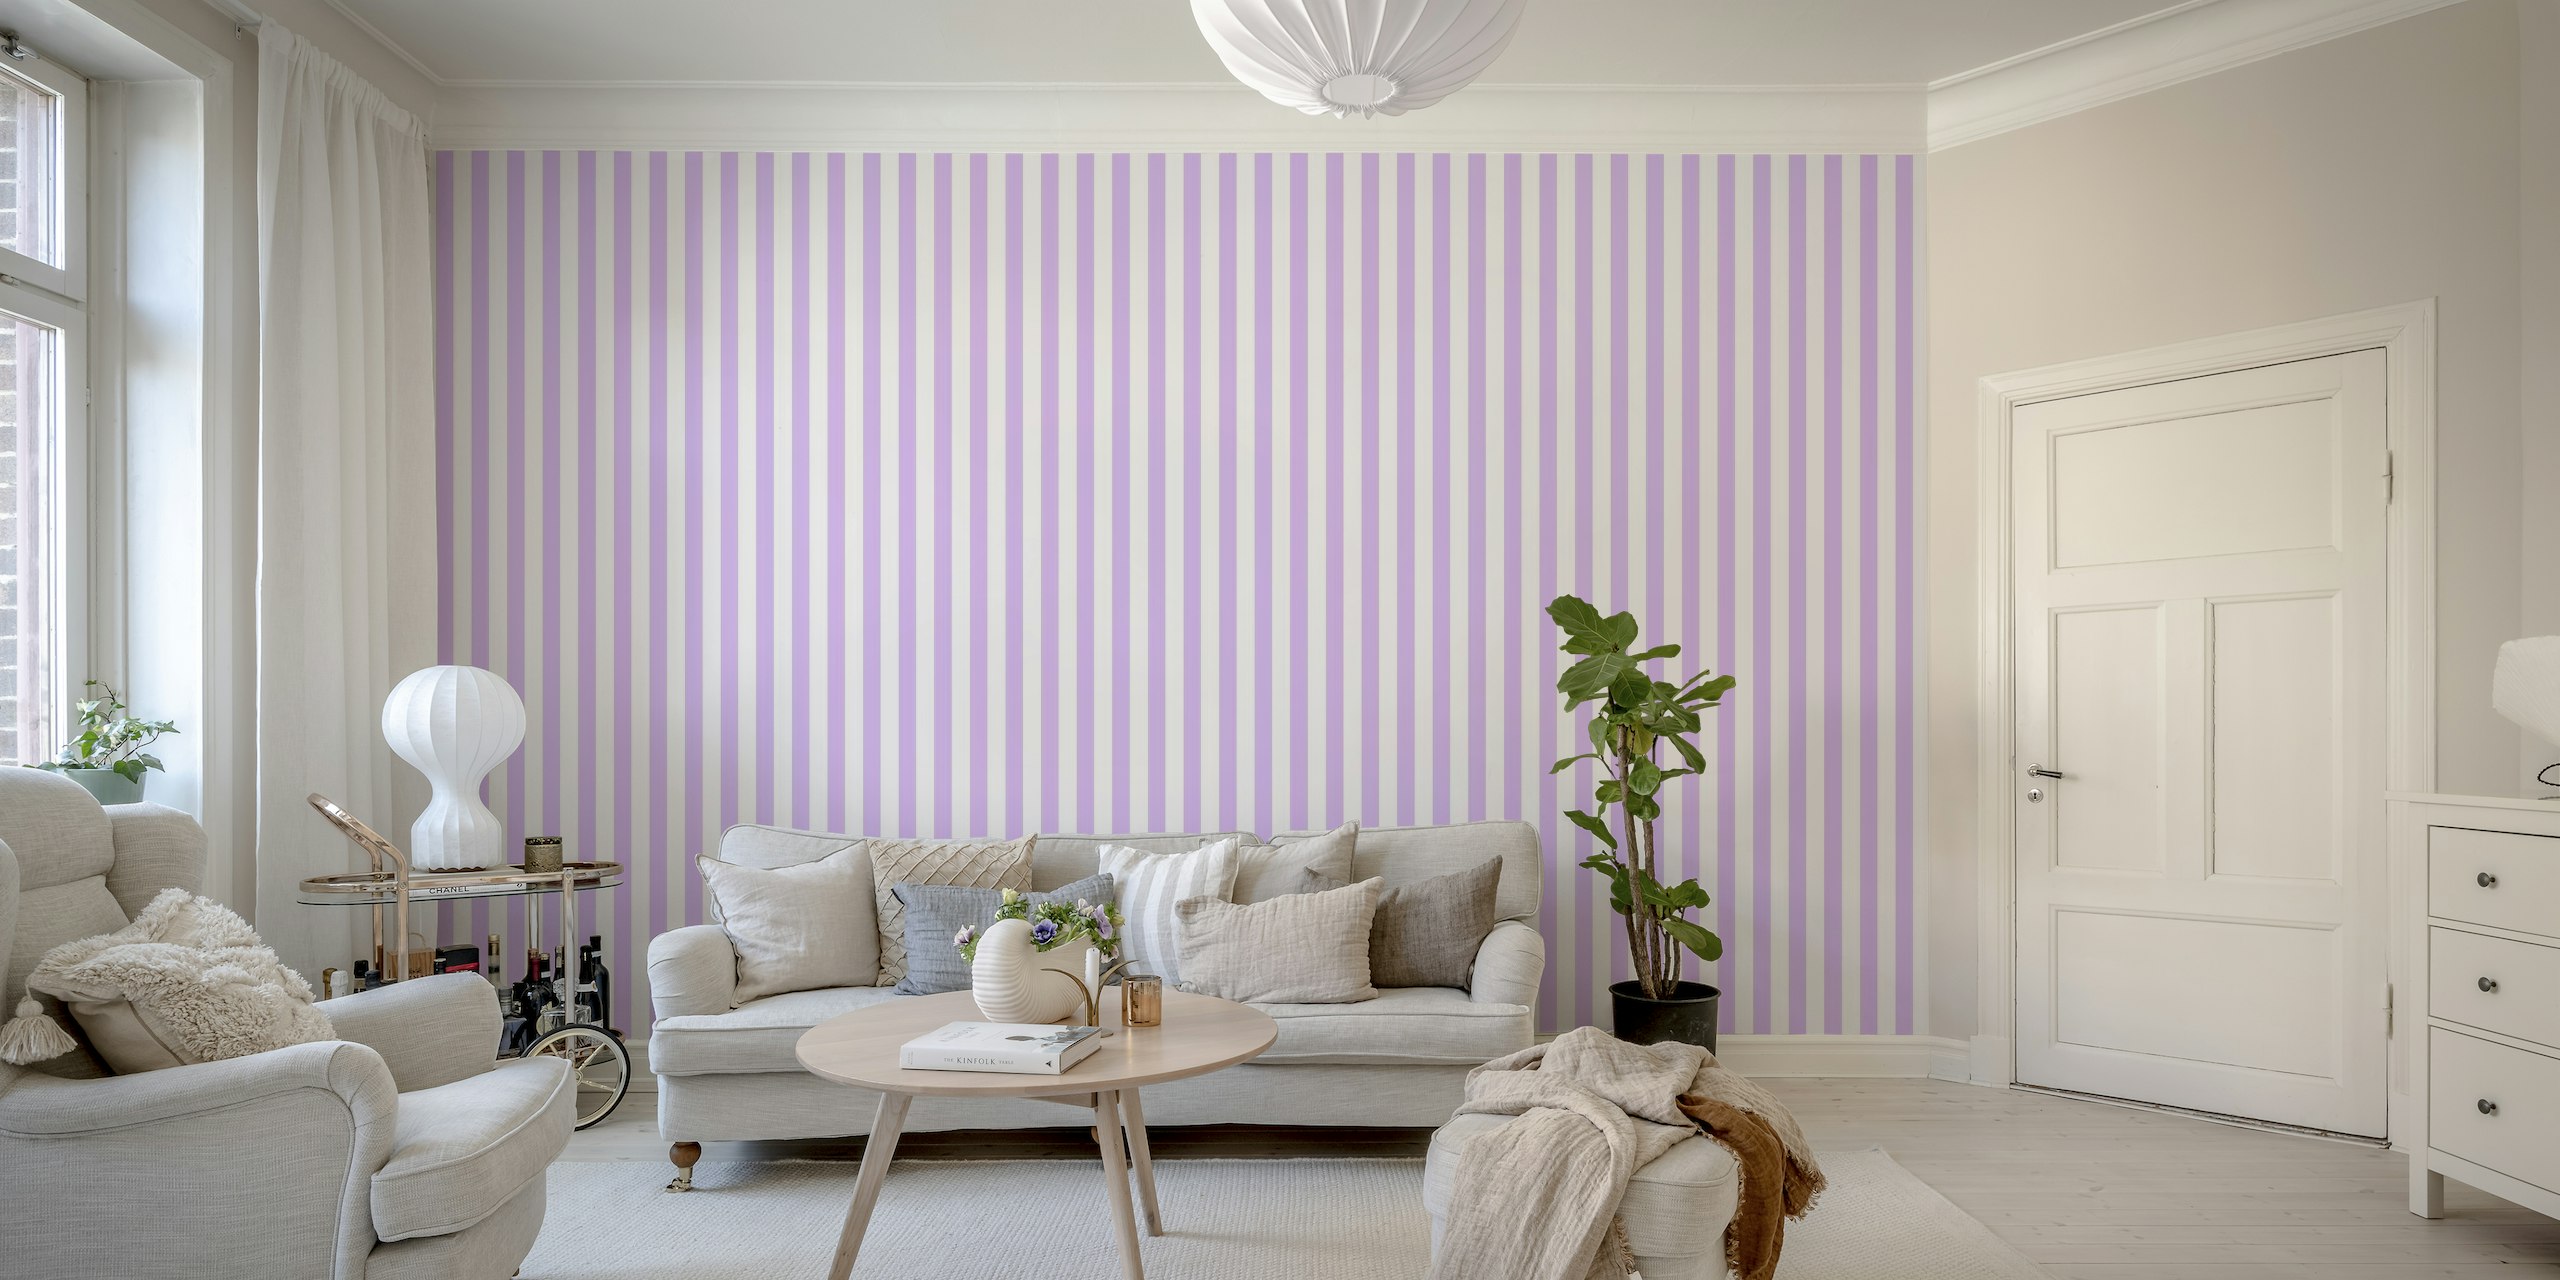 Lilac and white stripes papel de parede